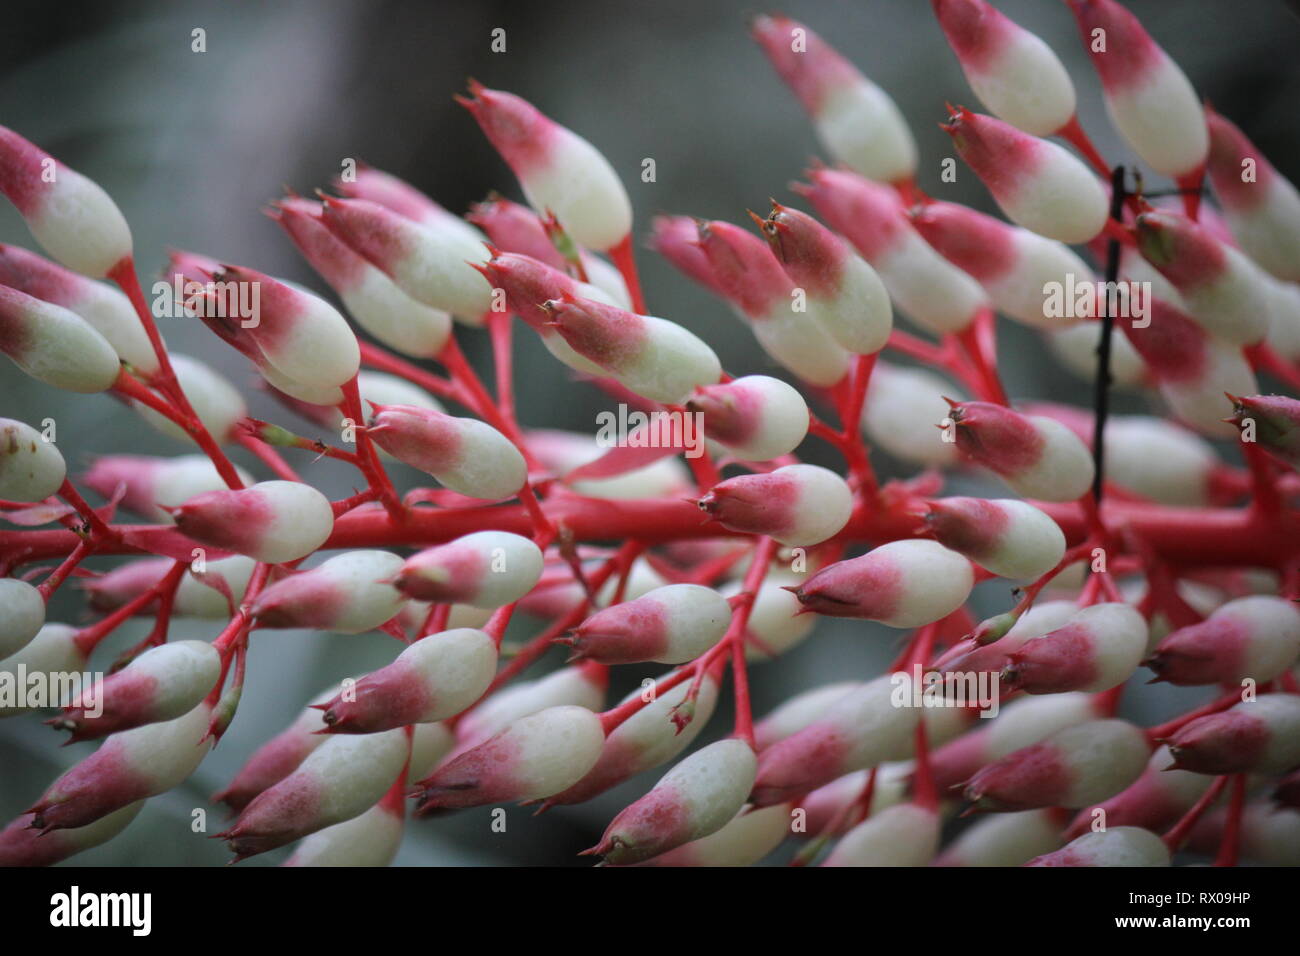 Portea petropolitana, bromeliad, flowering plant. Stock Photo